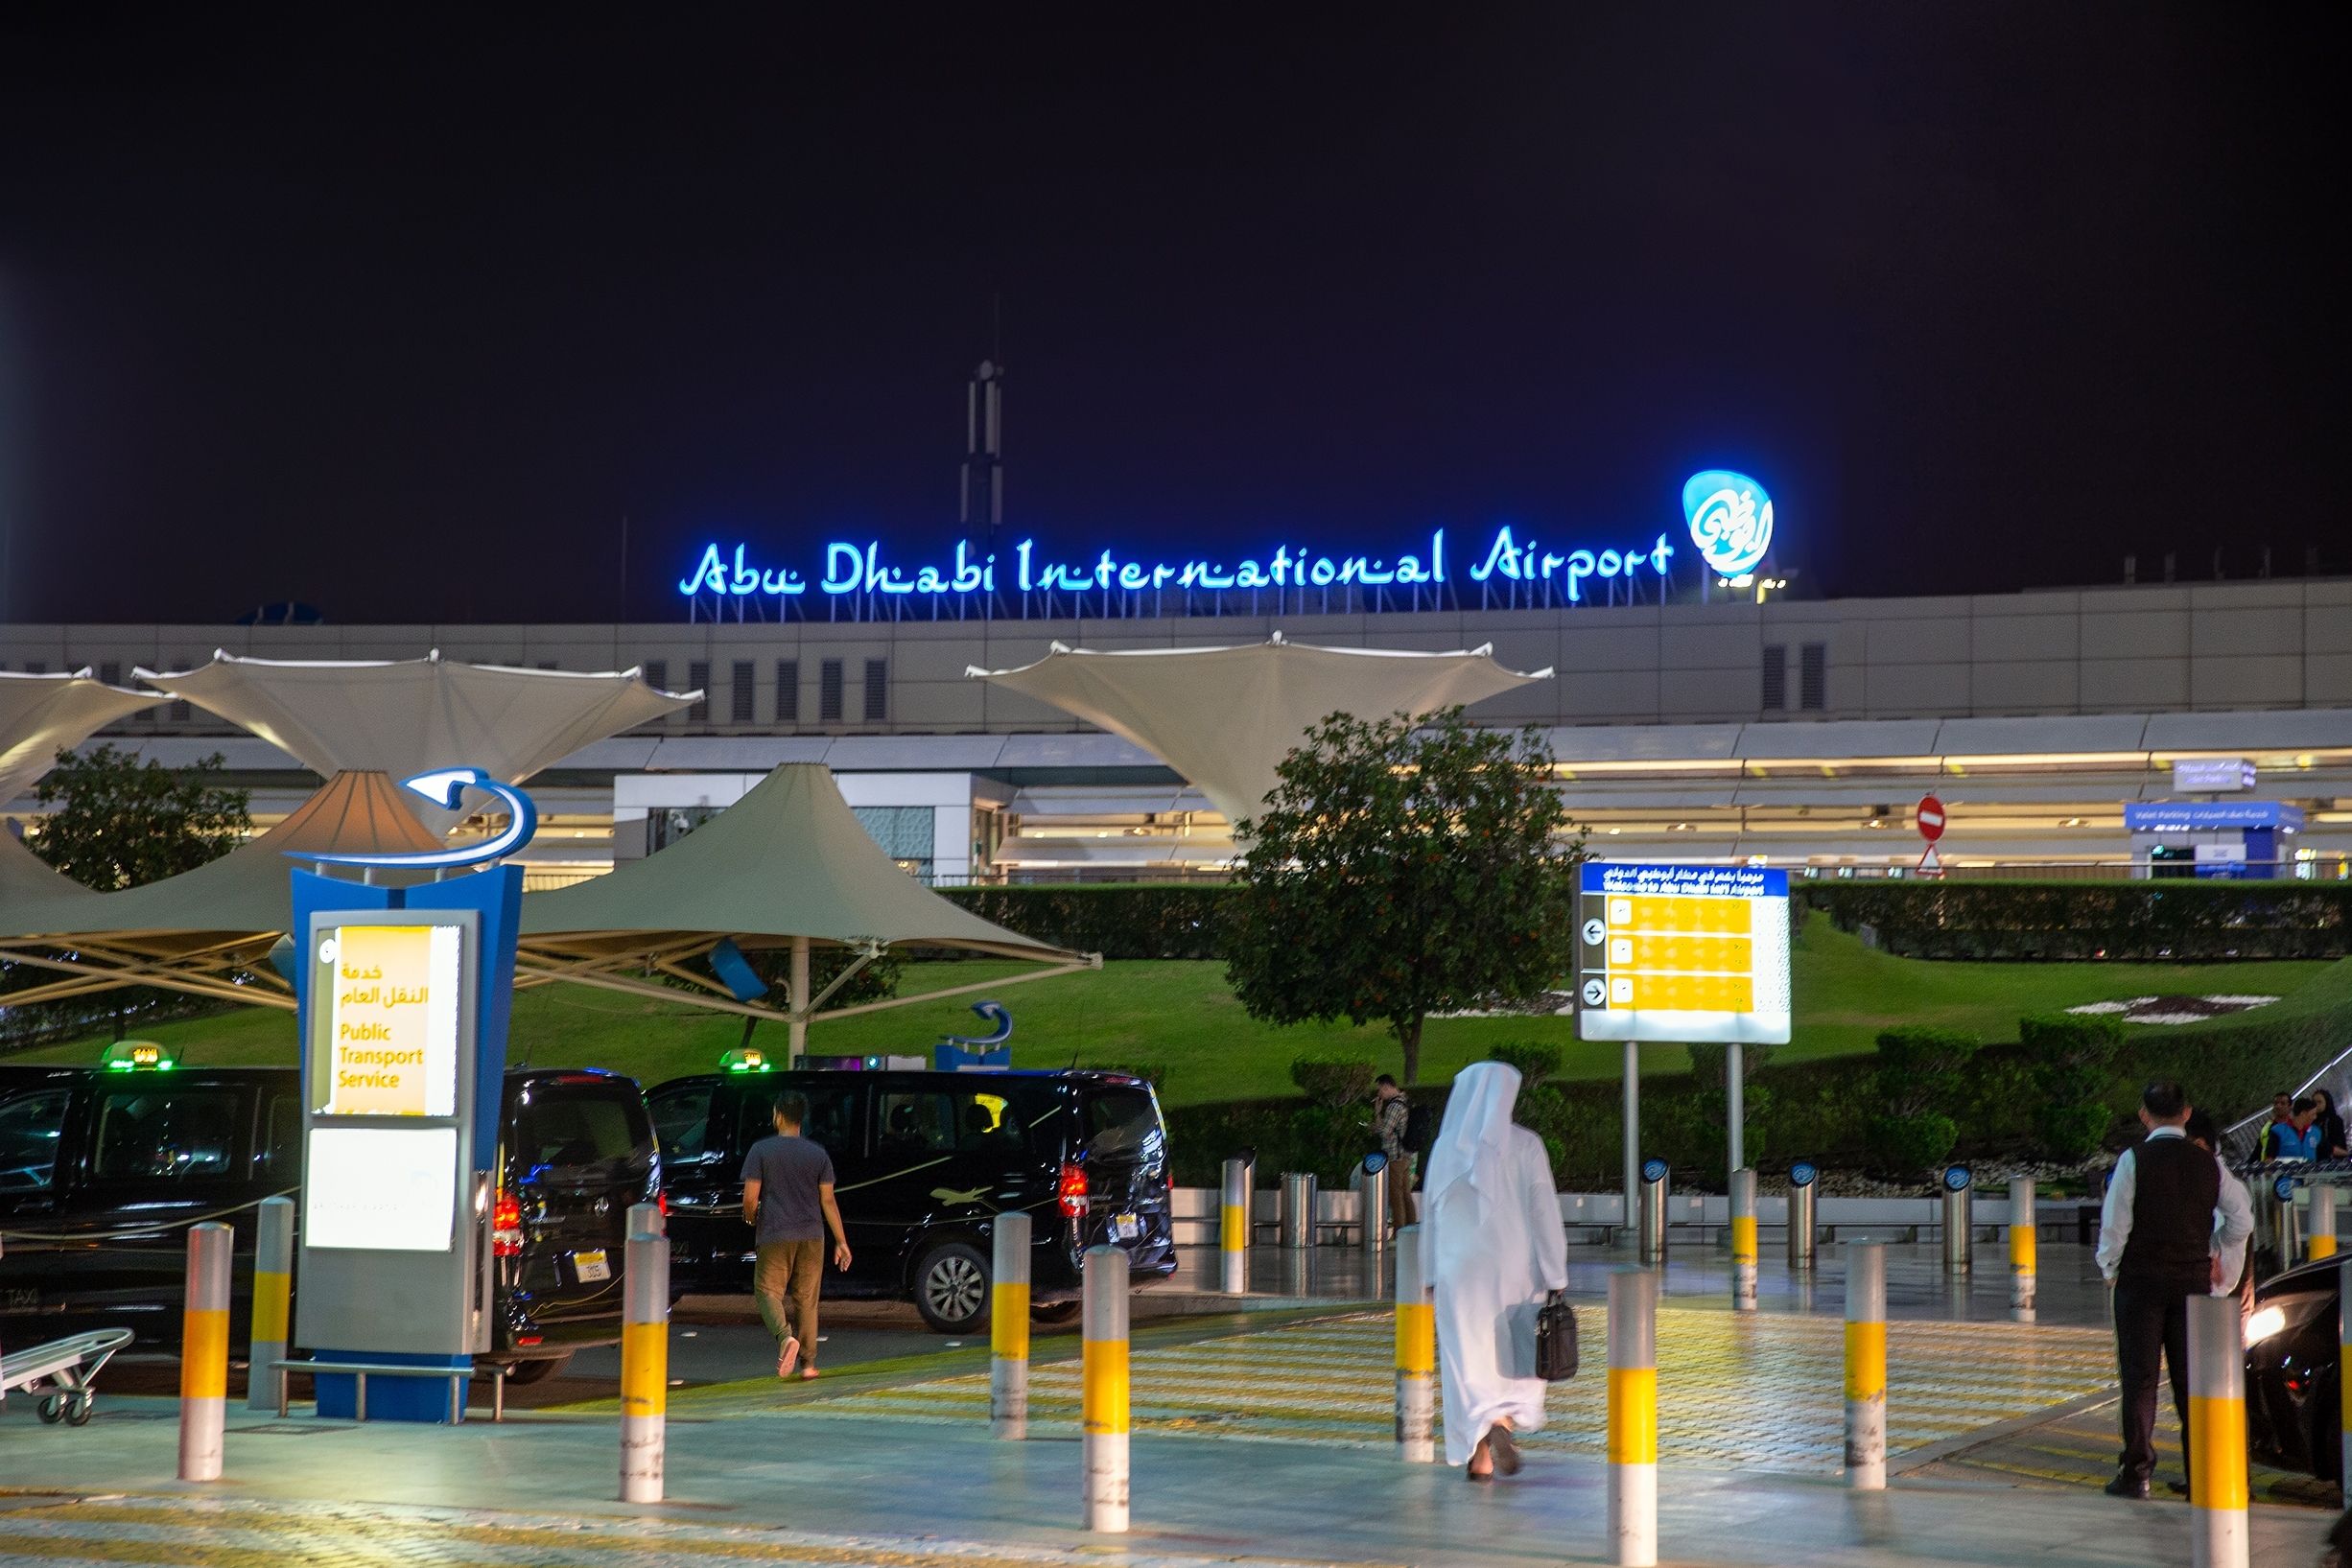 Passengers walking towards the main entrance to Abu Dhabi International Airport at night.